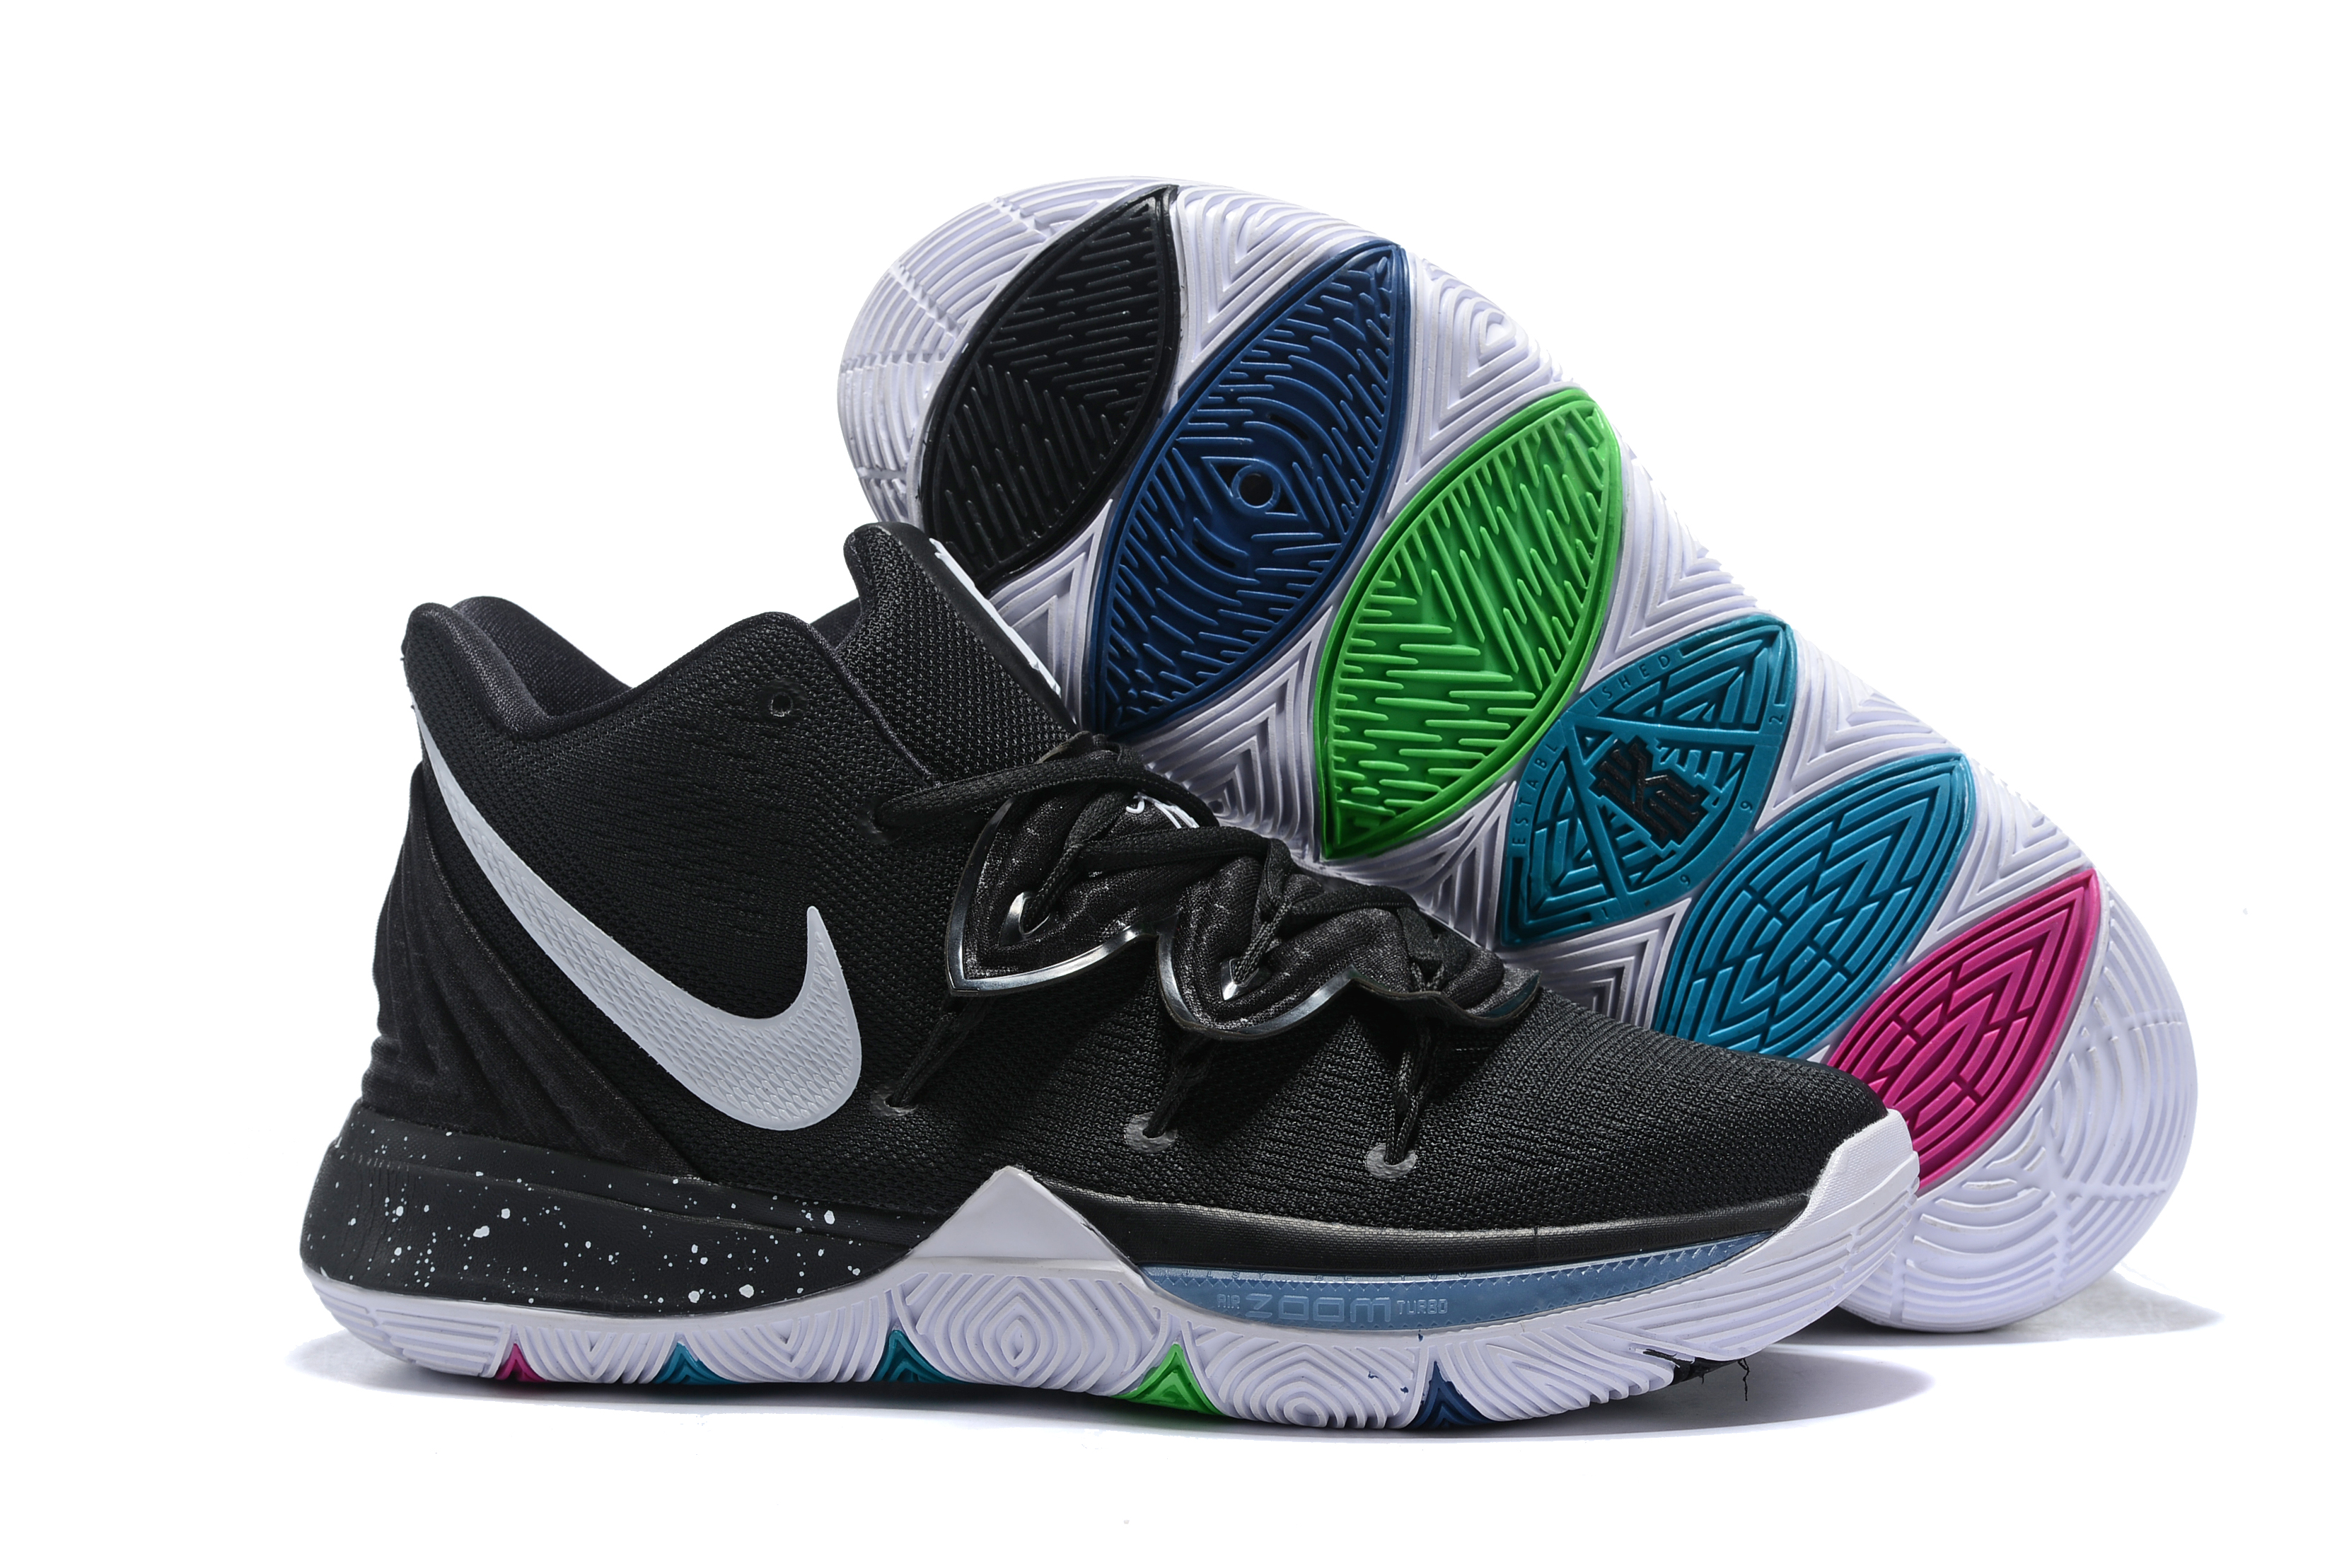 Nike Kyrie 5 Black White Shoes